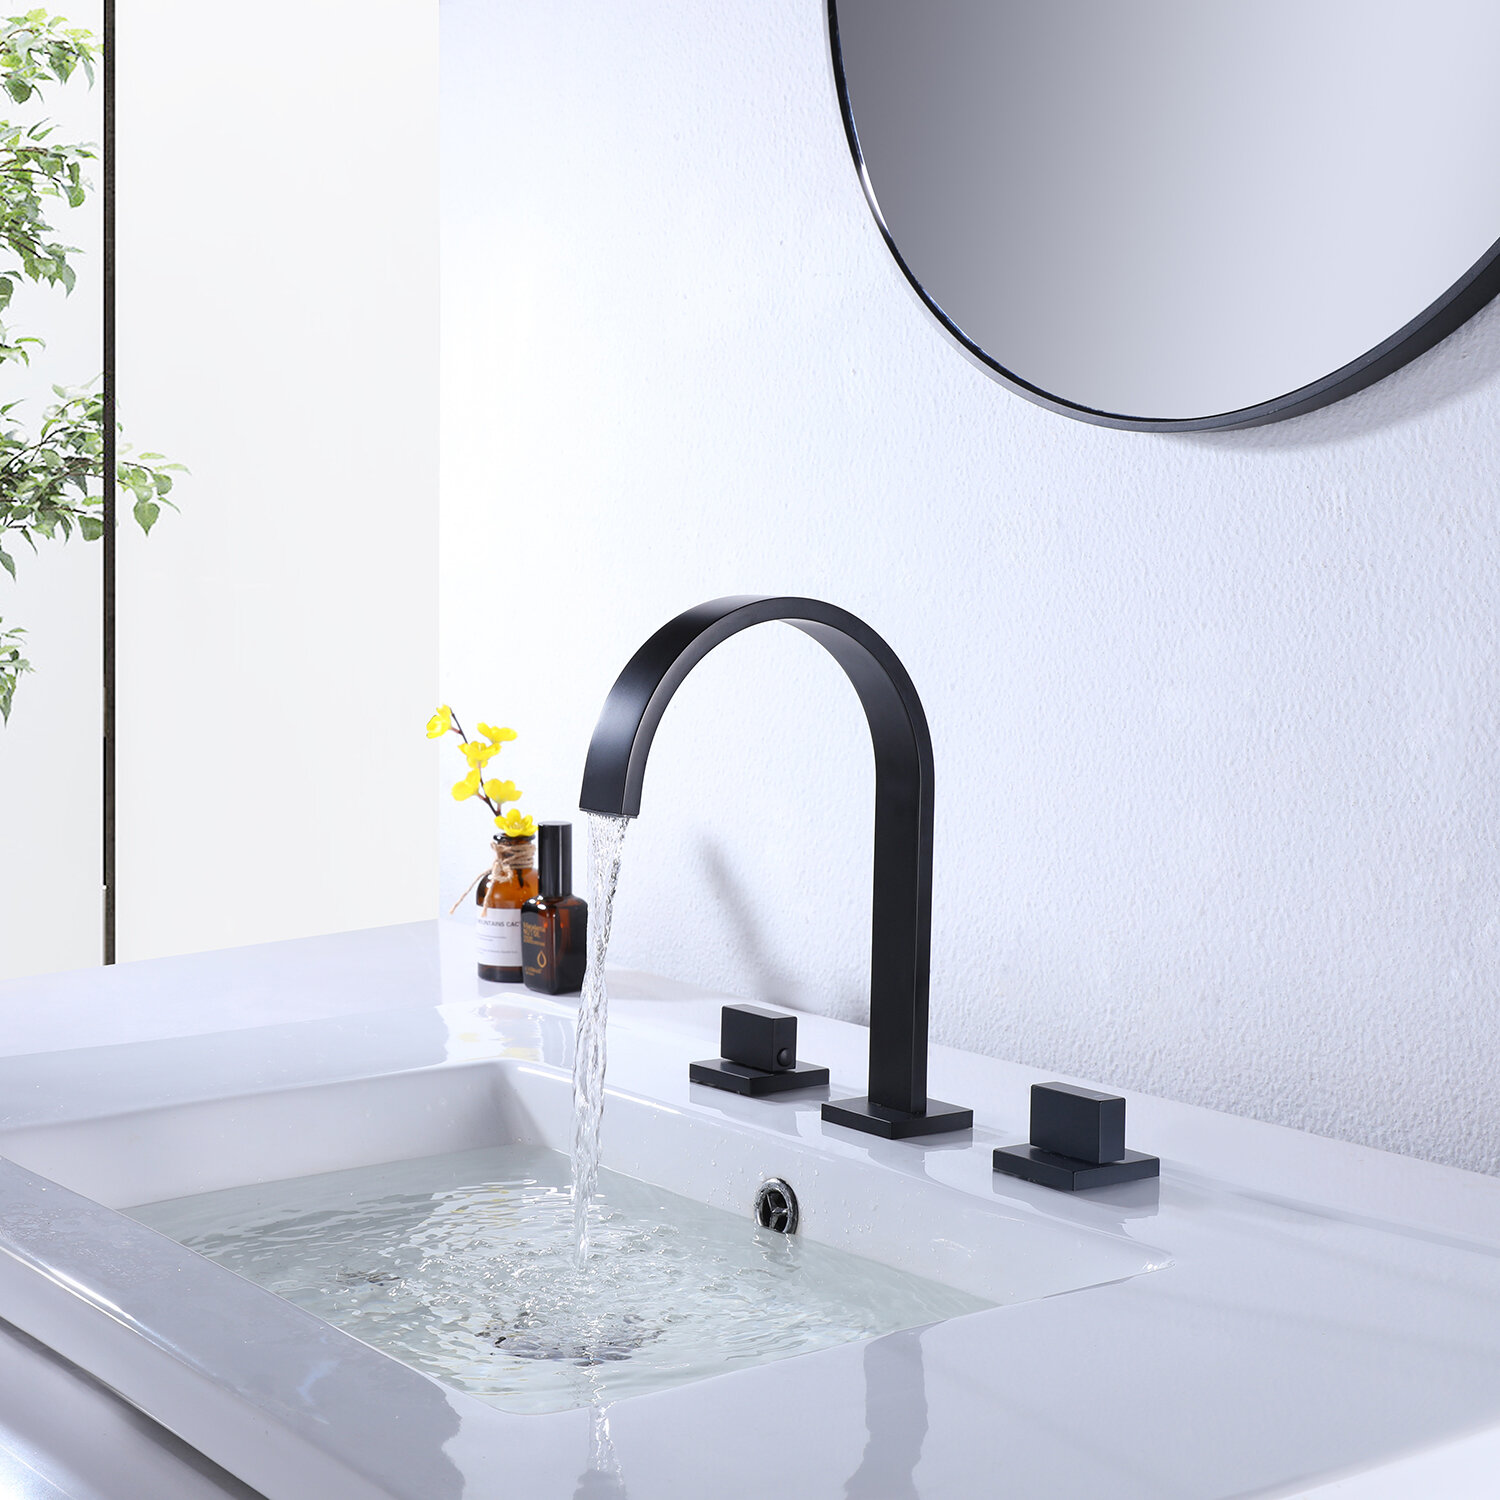 Modland Widespread 2 Handle Contemporary Bathroom Sink Faucet Lavatory Faucet In Matte Black Lead Free Reviews Wayfairca